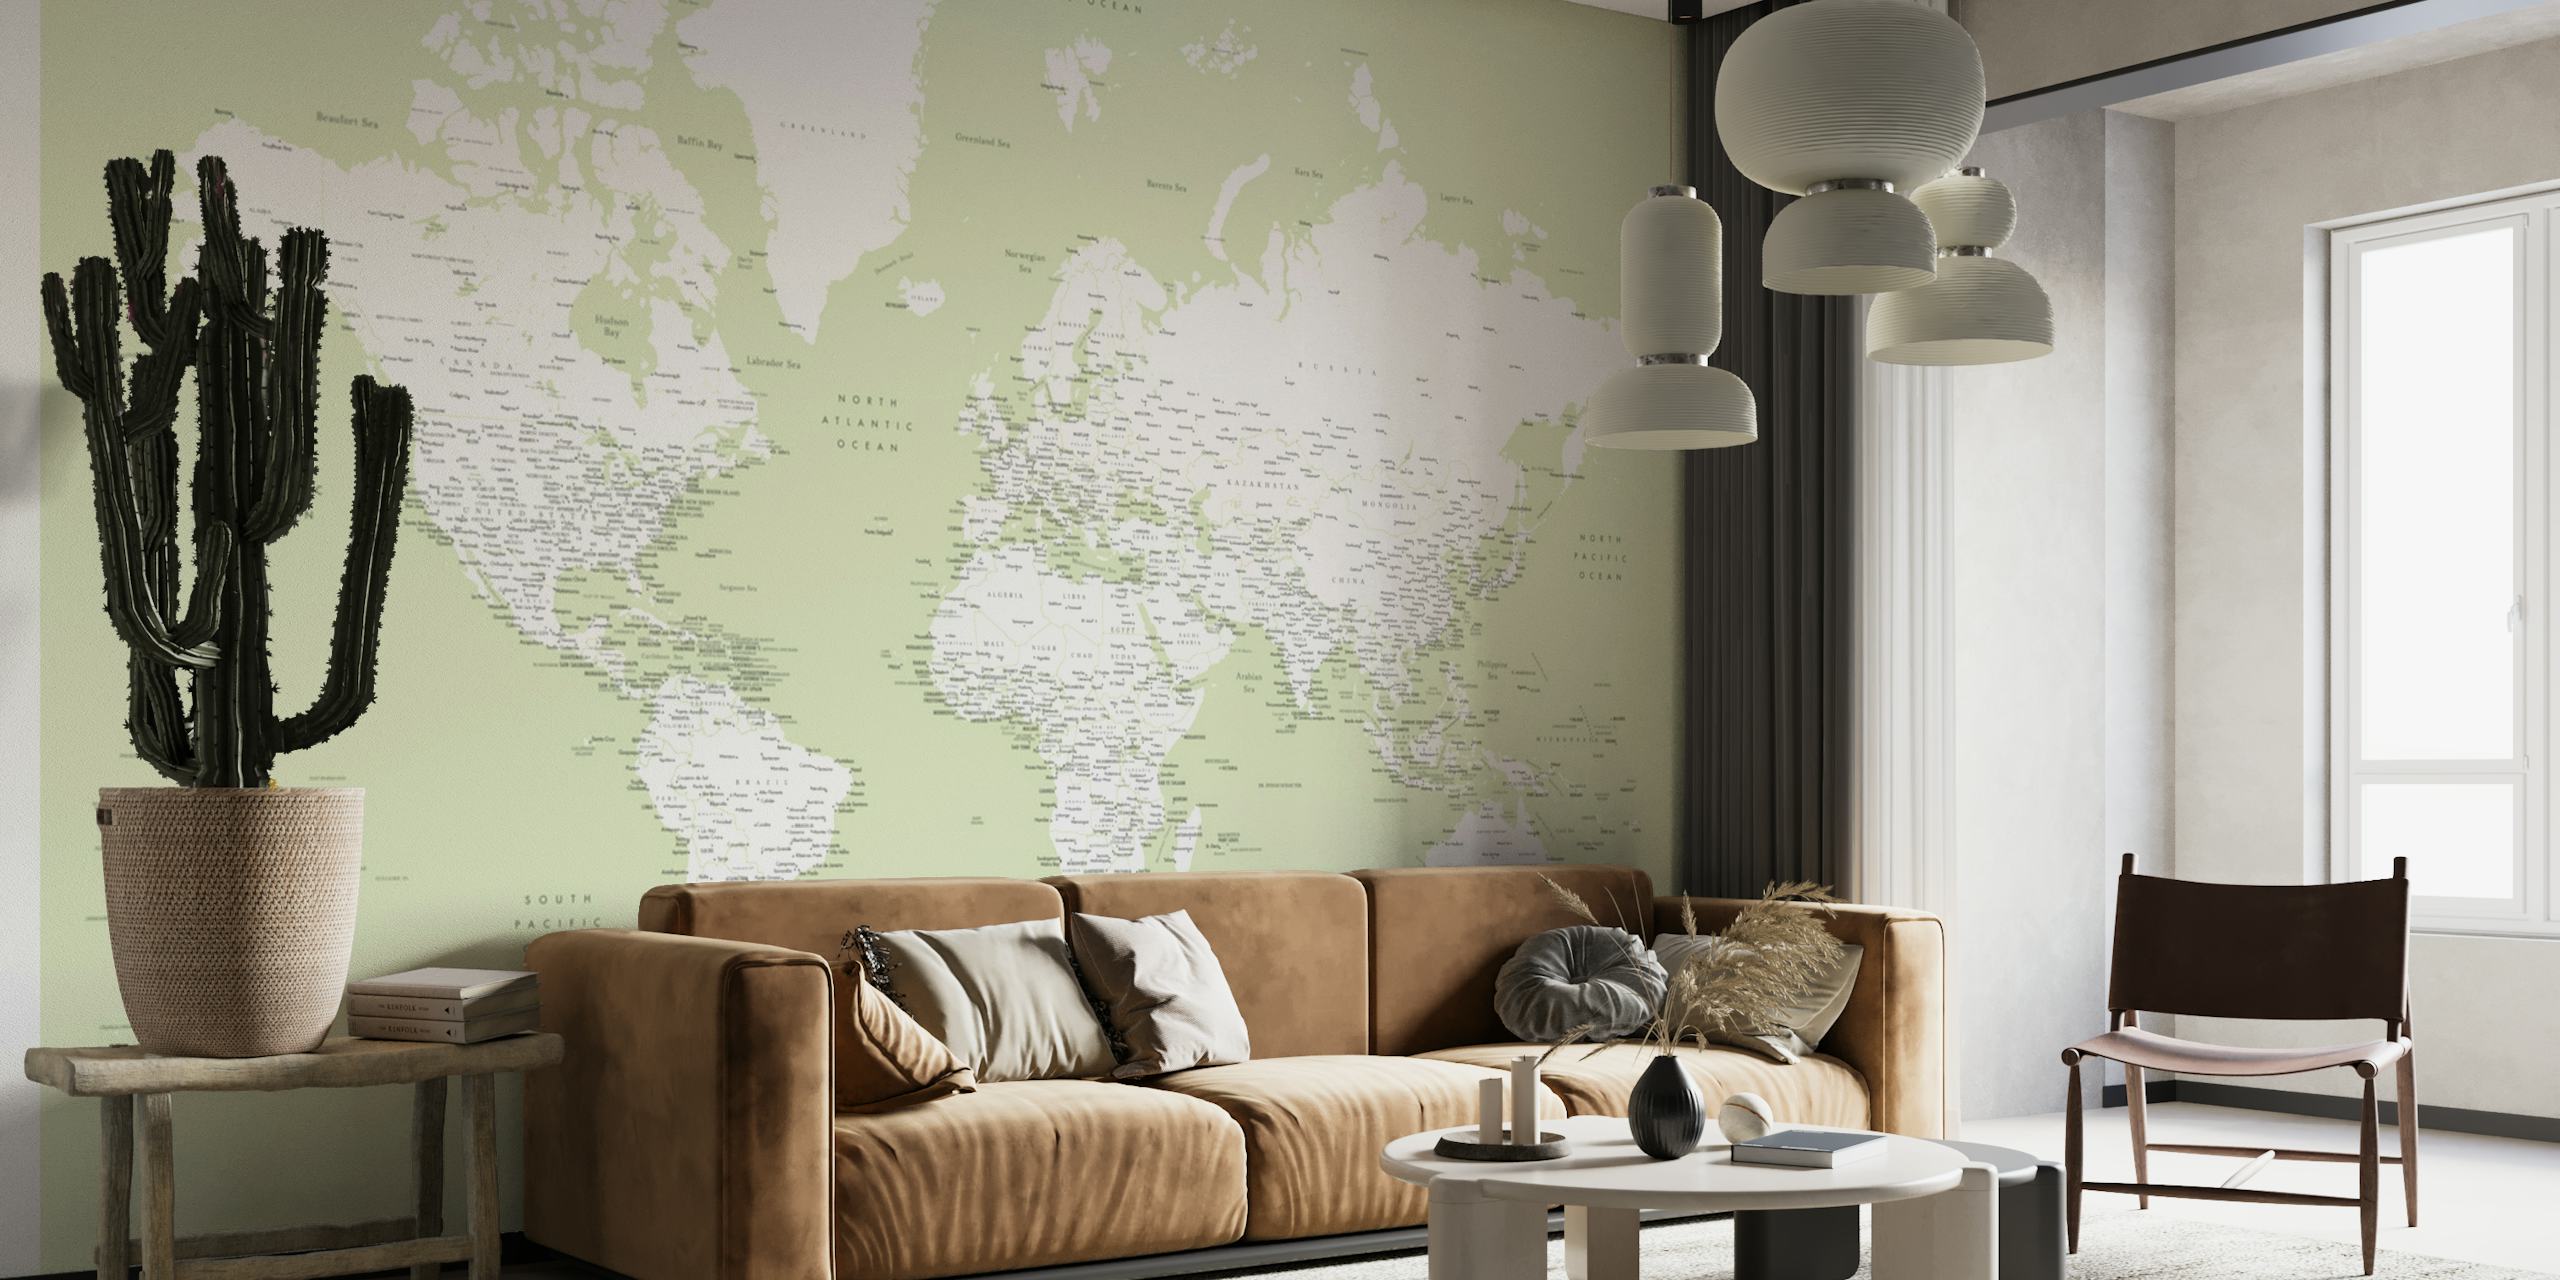 Detailed world map Xolani papel pintado